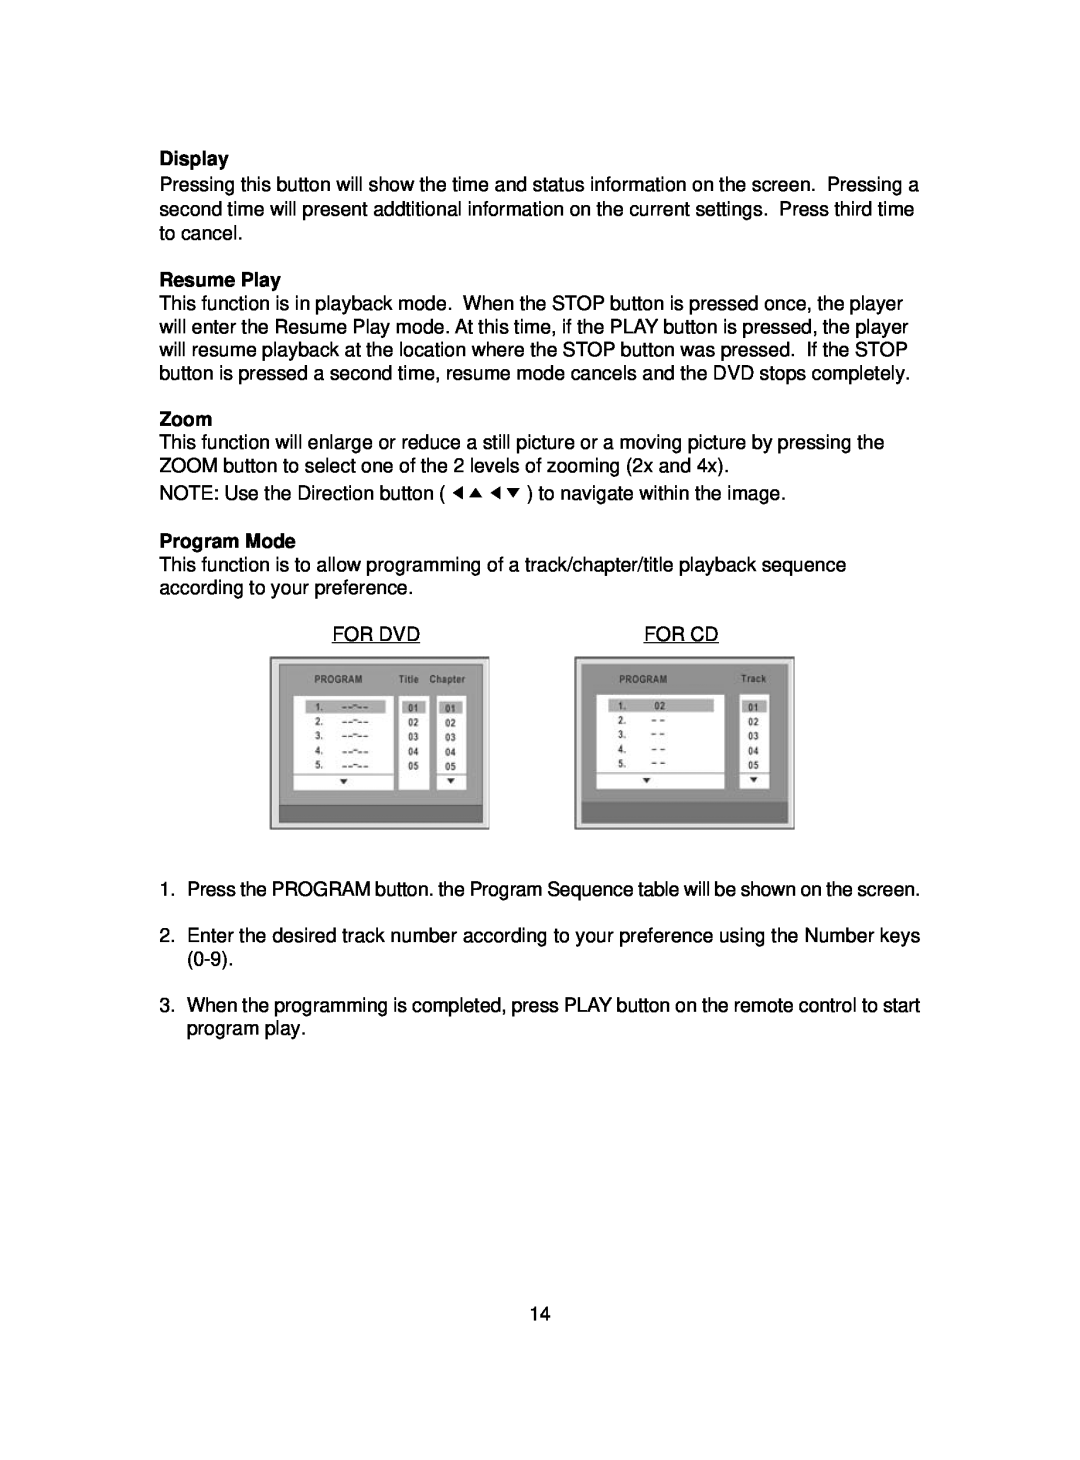 MGA Entertainment SMB-657 manual Display, Resume Play, Zoom, Program Mode 